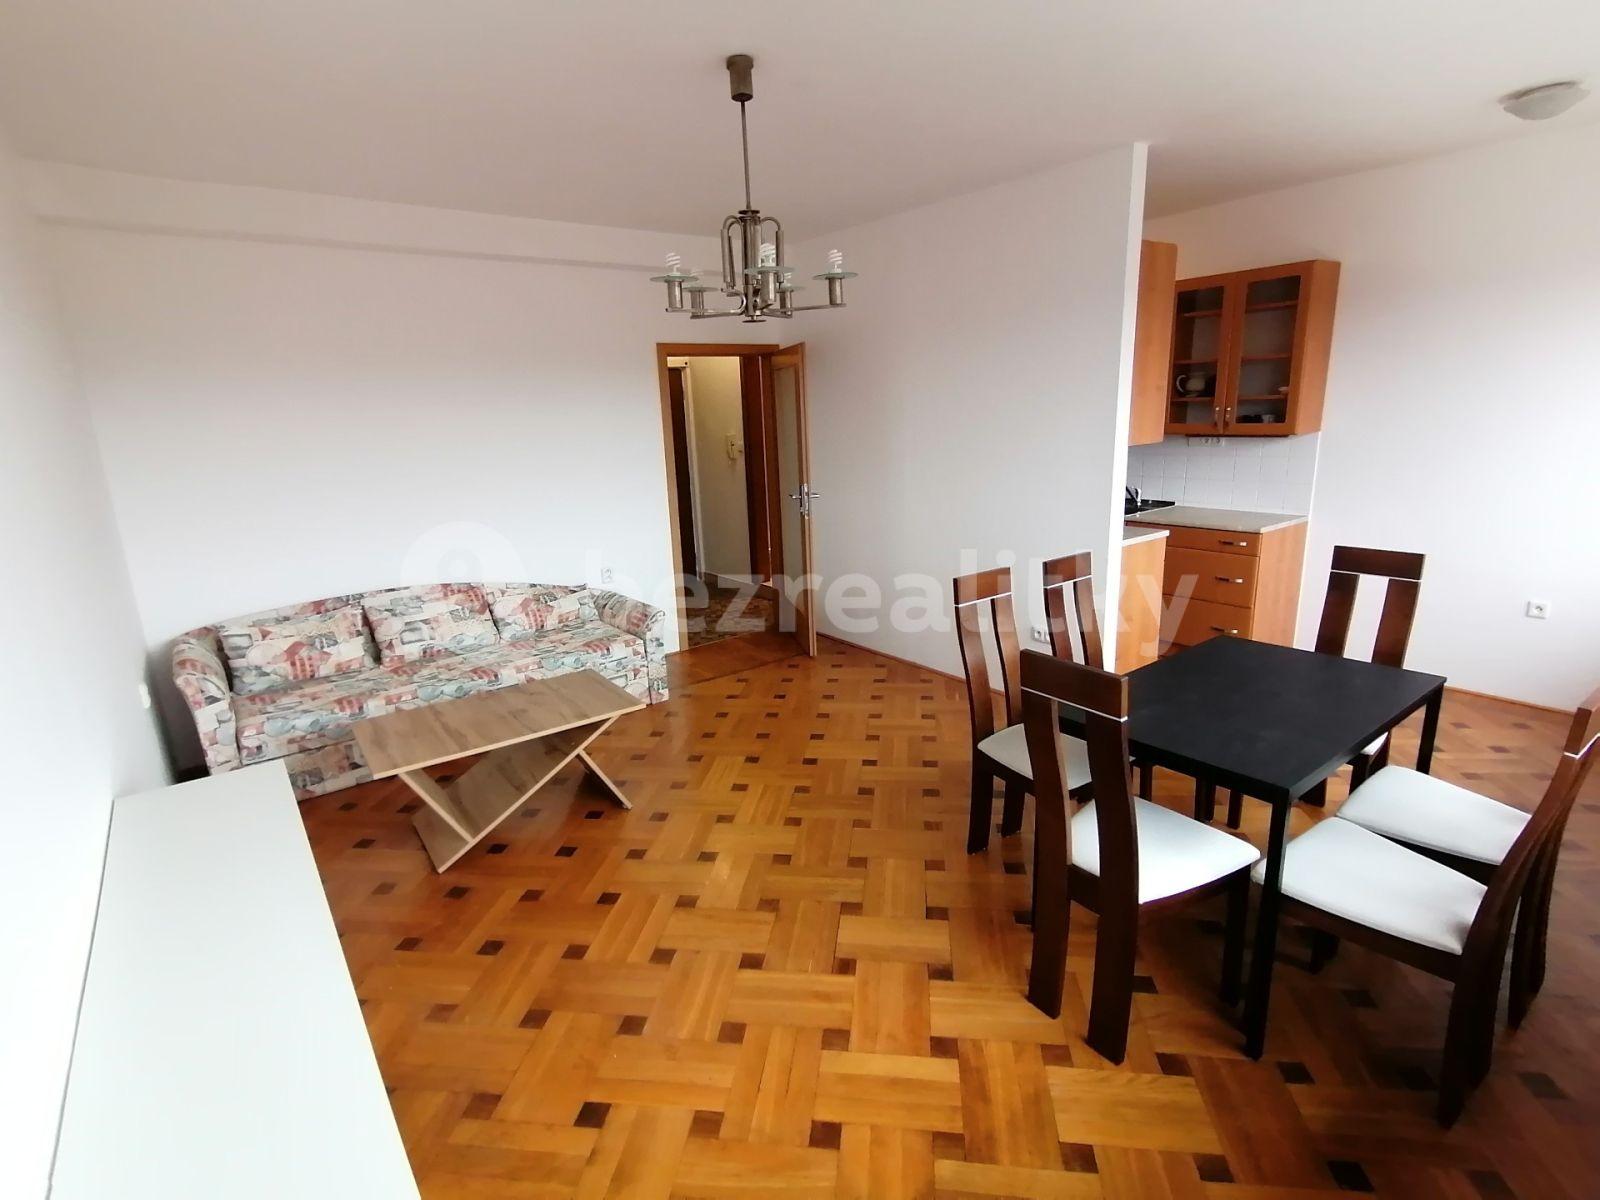 3 bedroom with open-plan kitchen flat to rent, 130 m², Xaveriova, Prague, Prague